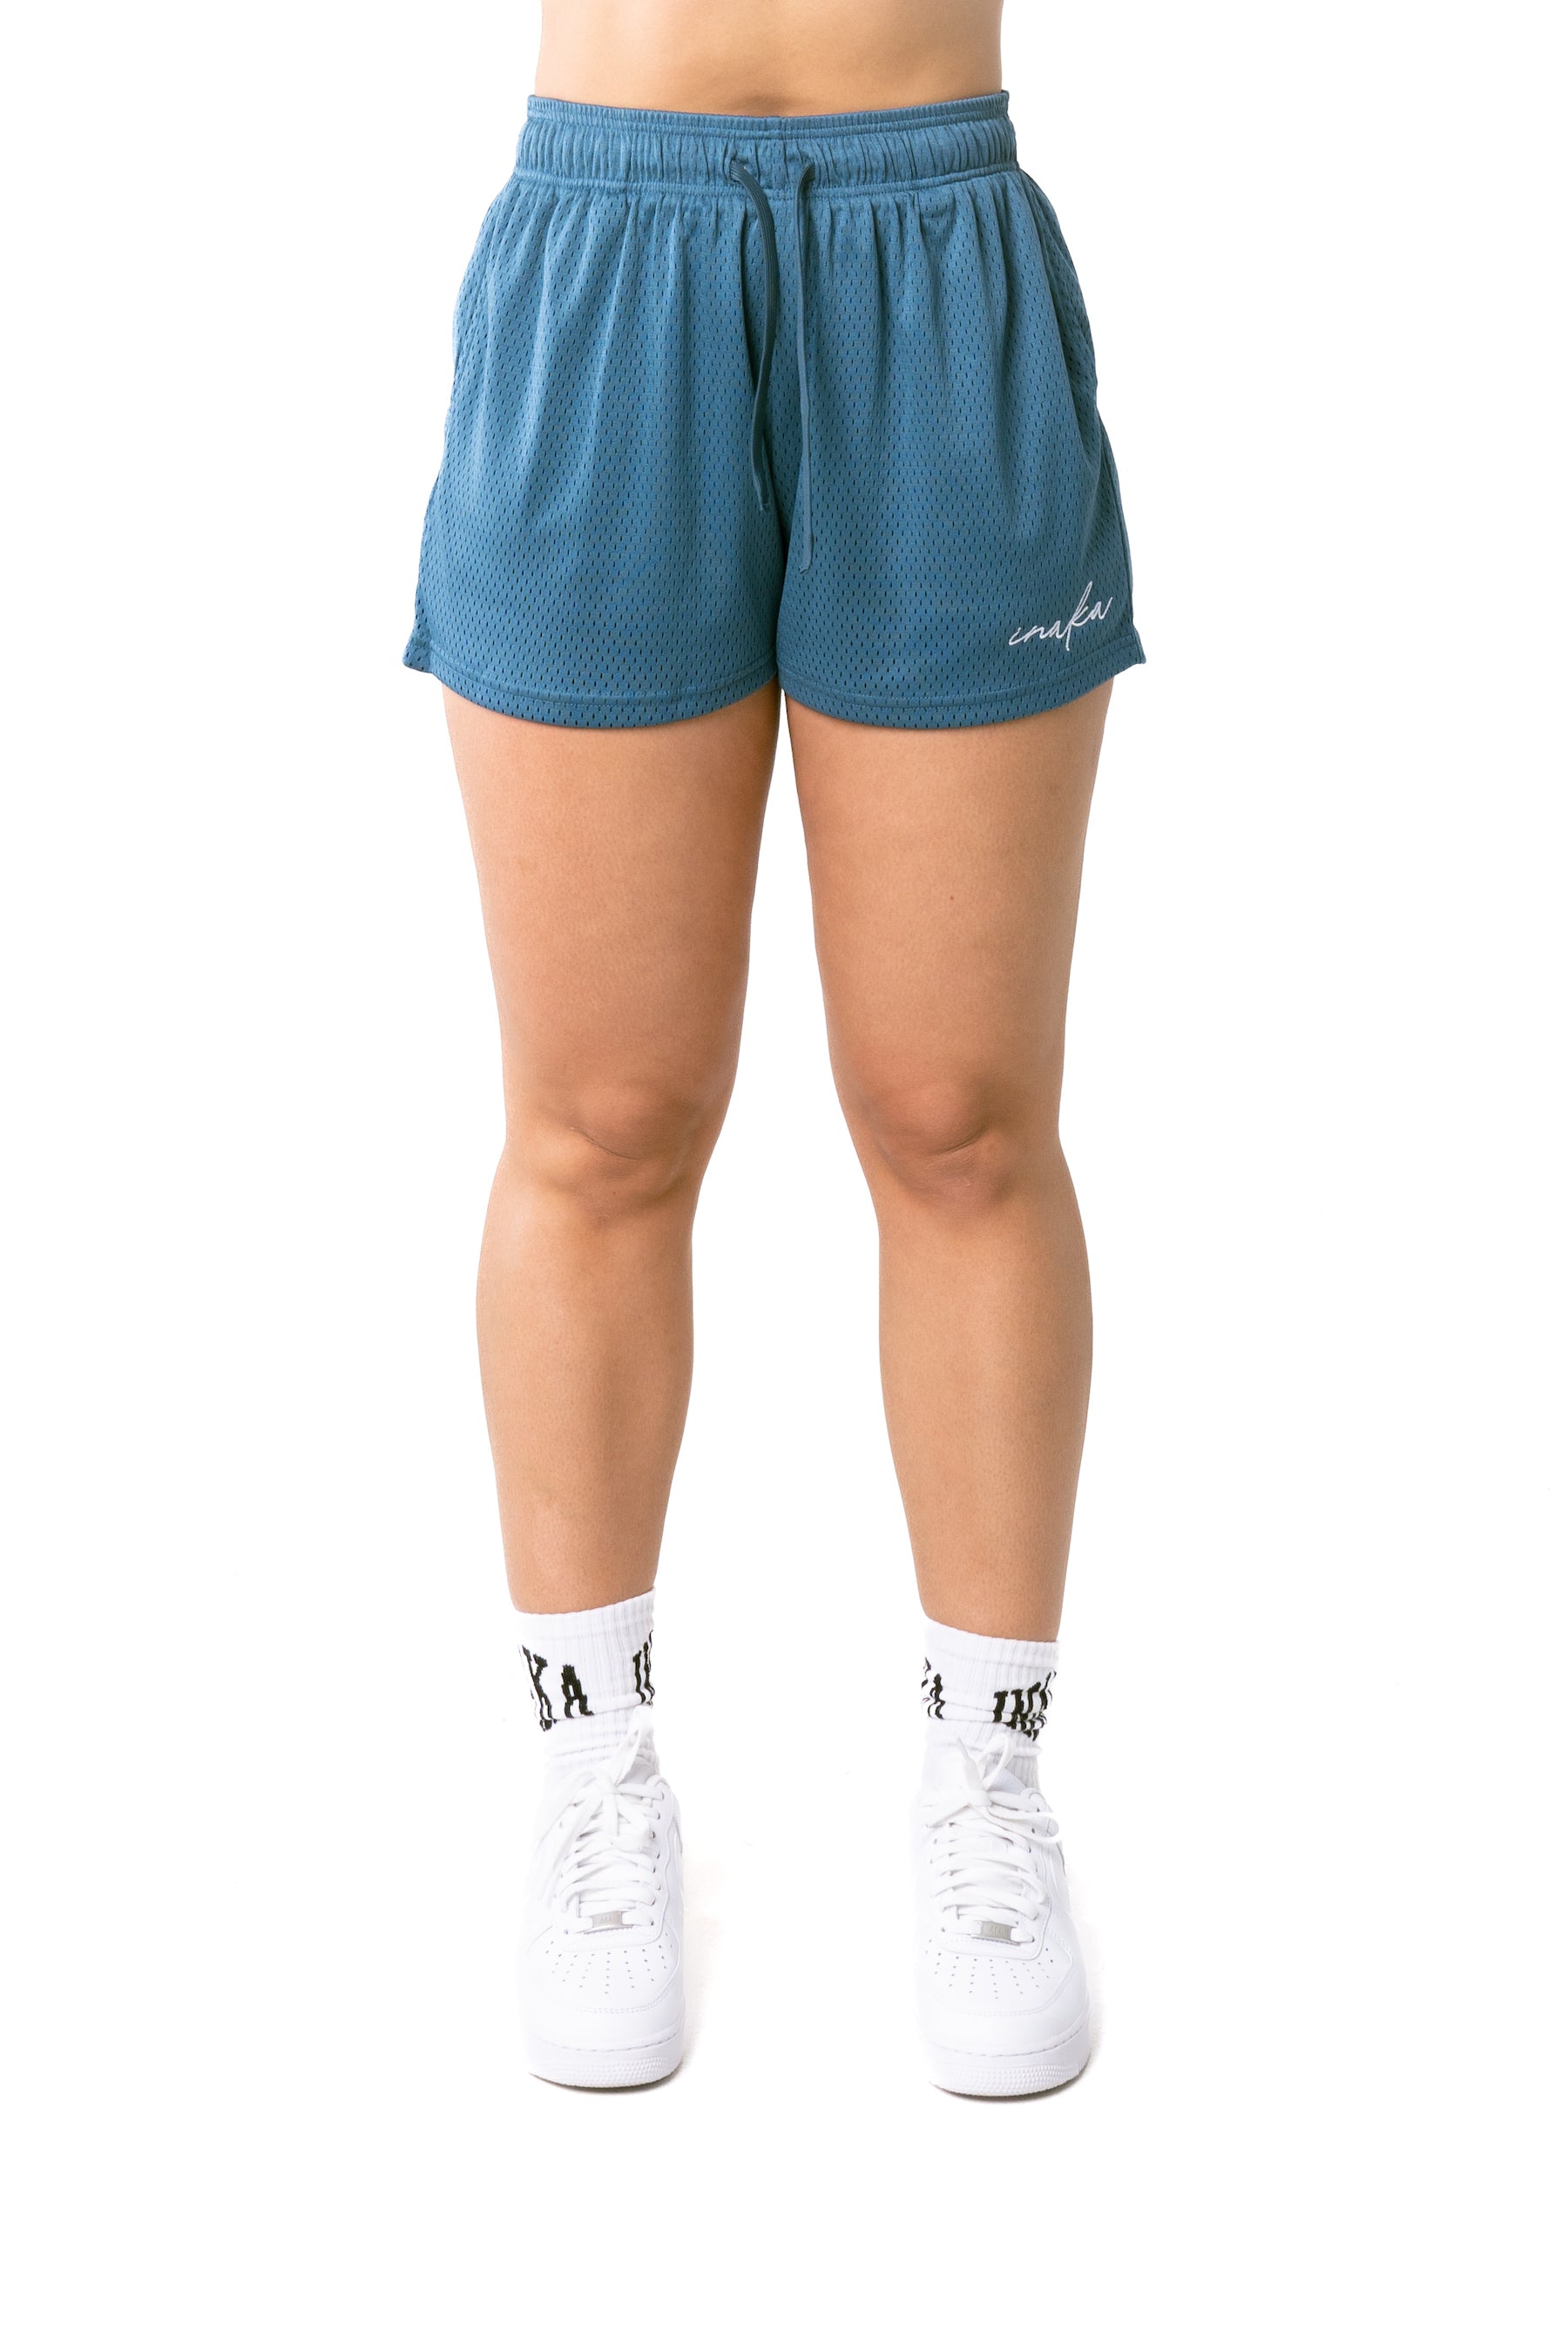 Women's Basic Shorts - Atlantic Blue